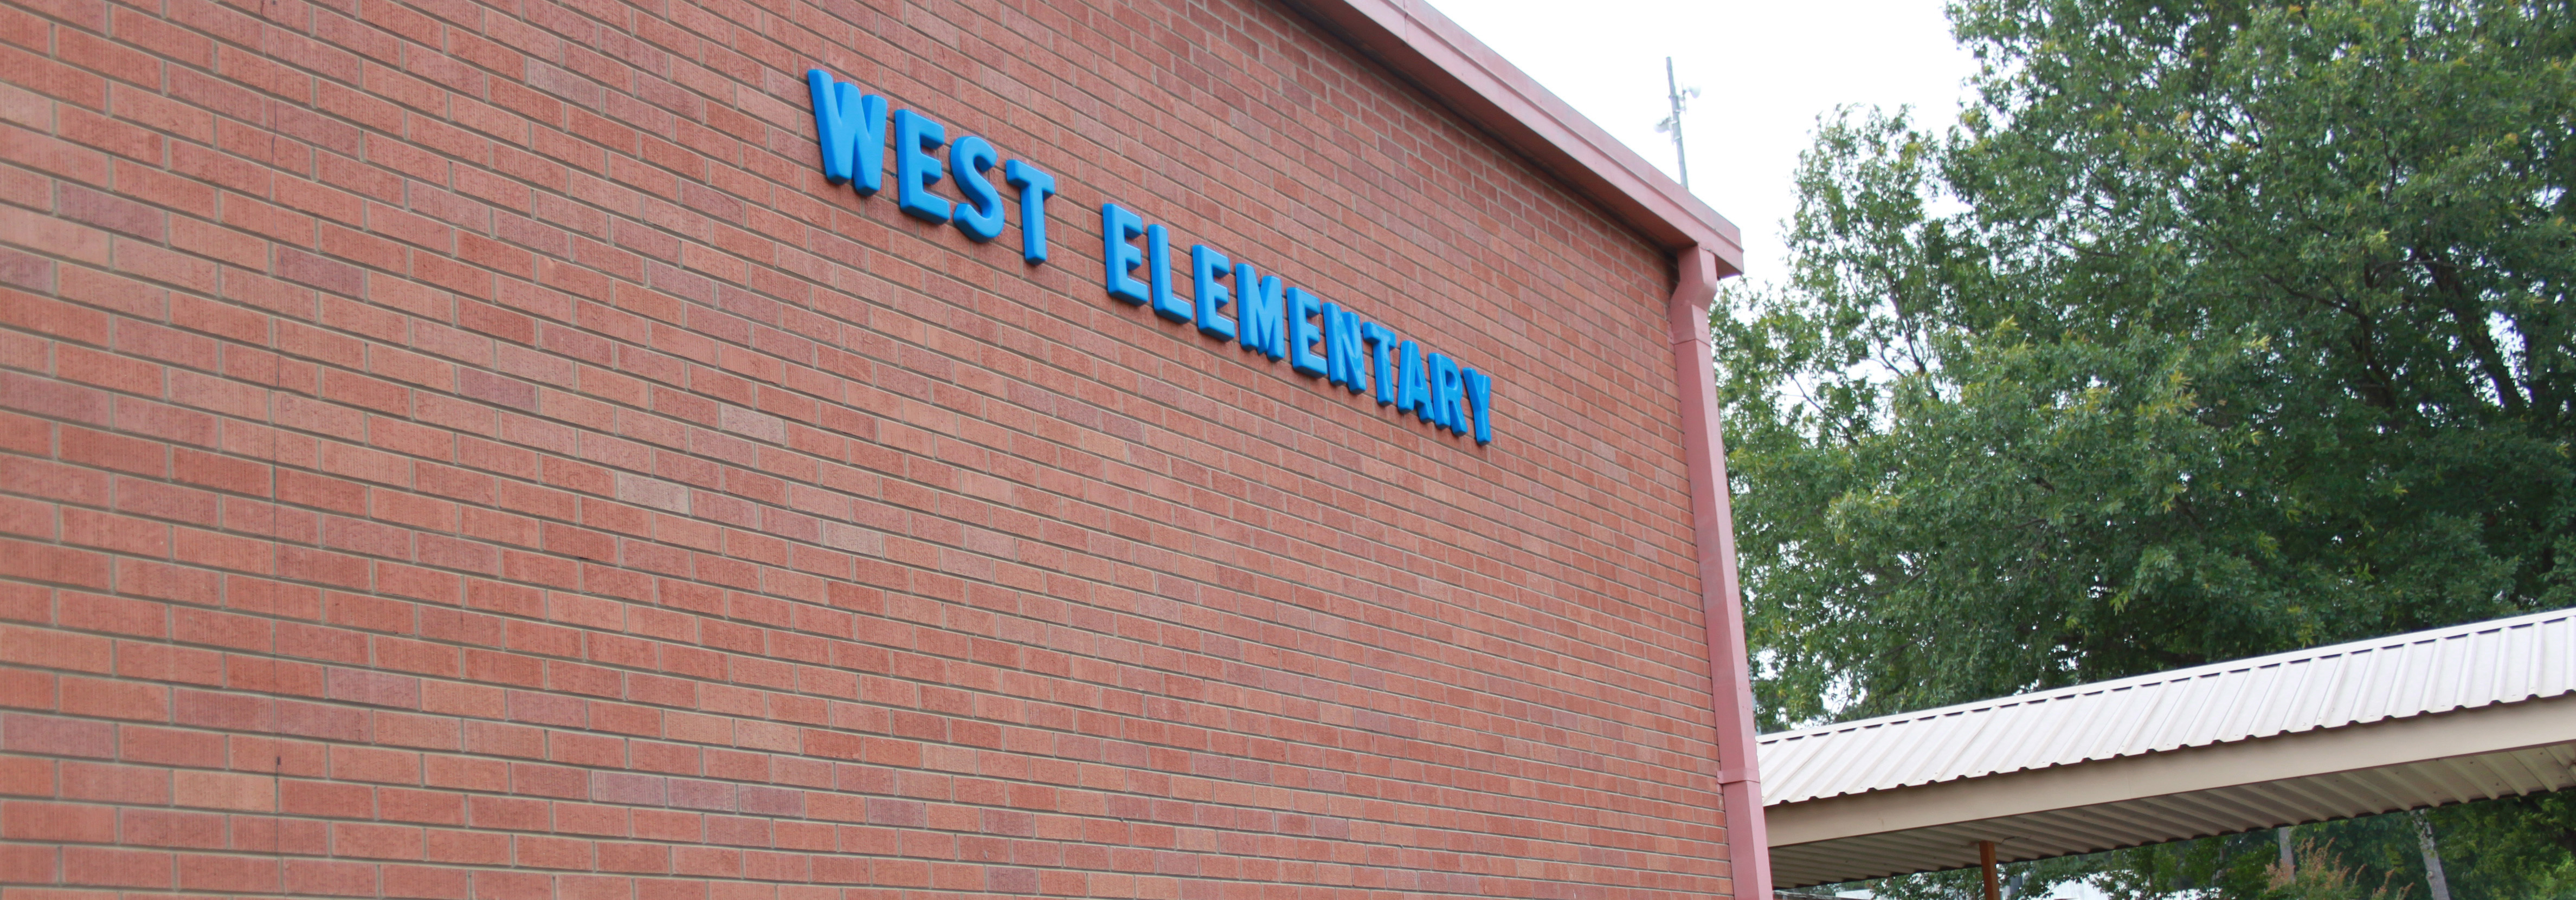 West Elementary